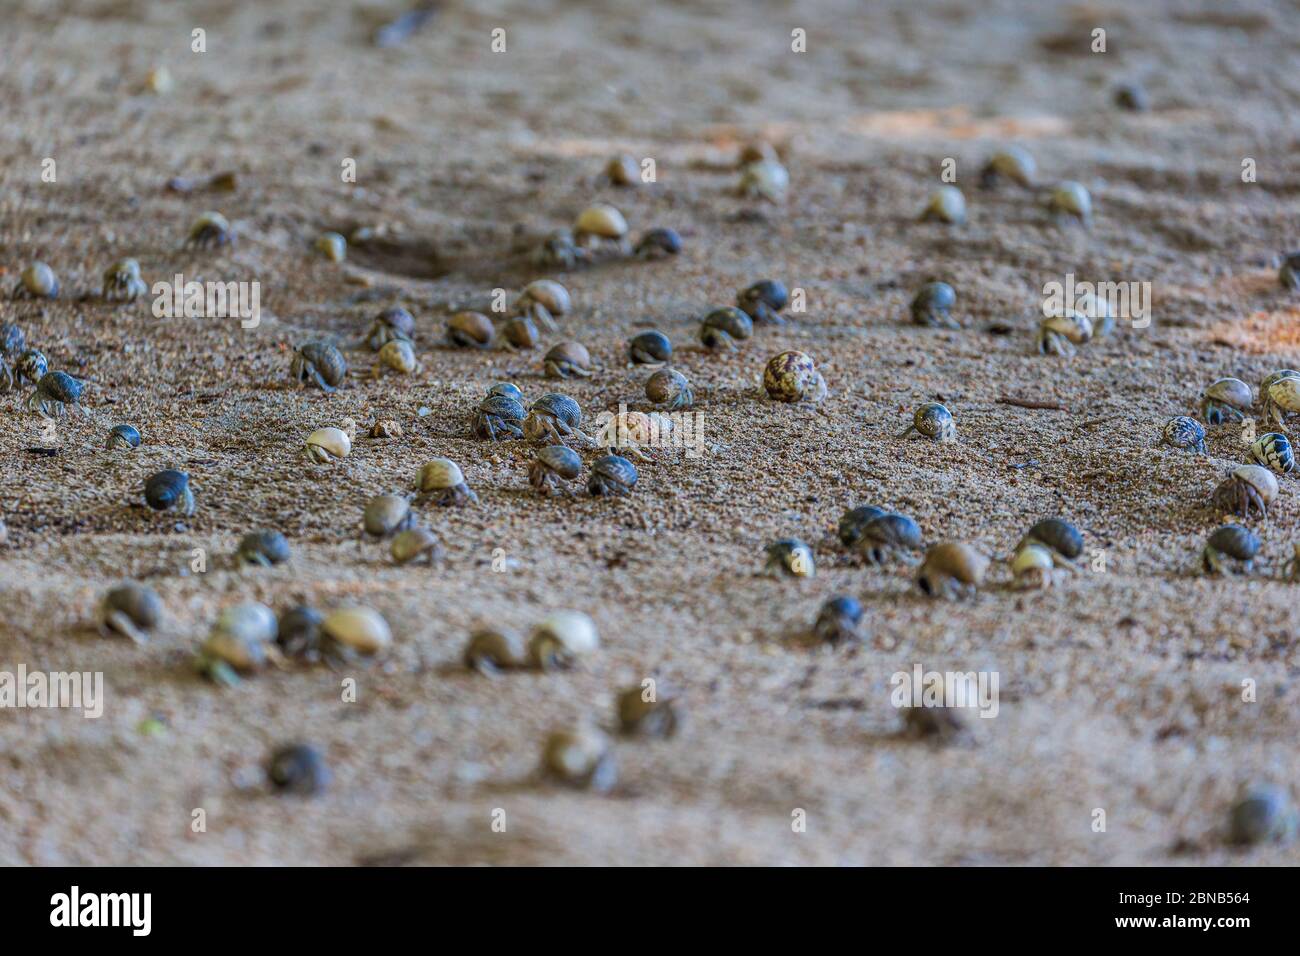 Hermit crabs on the beach, Nosibe - Madagscar Stock Photo